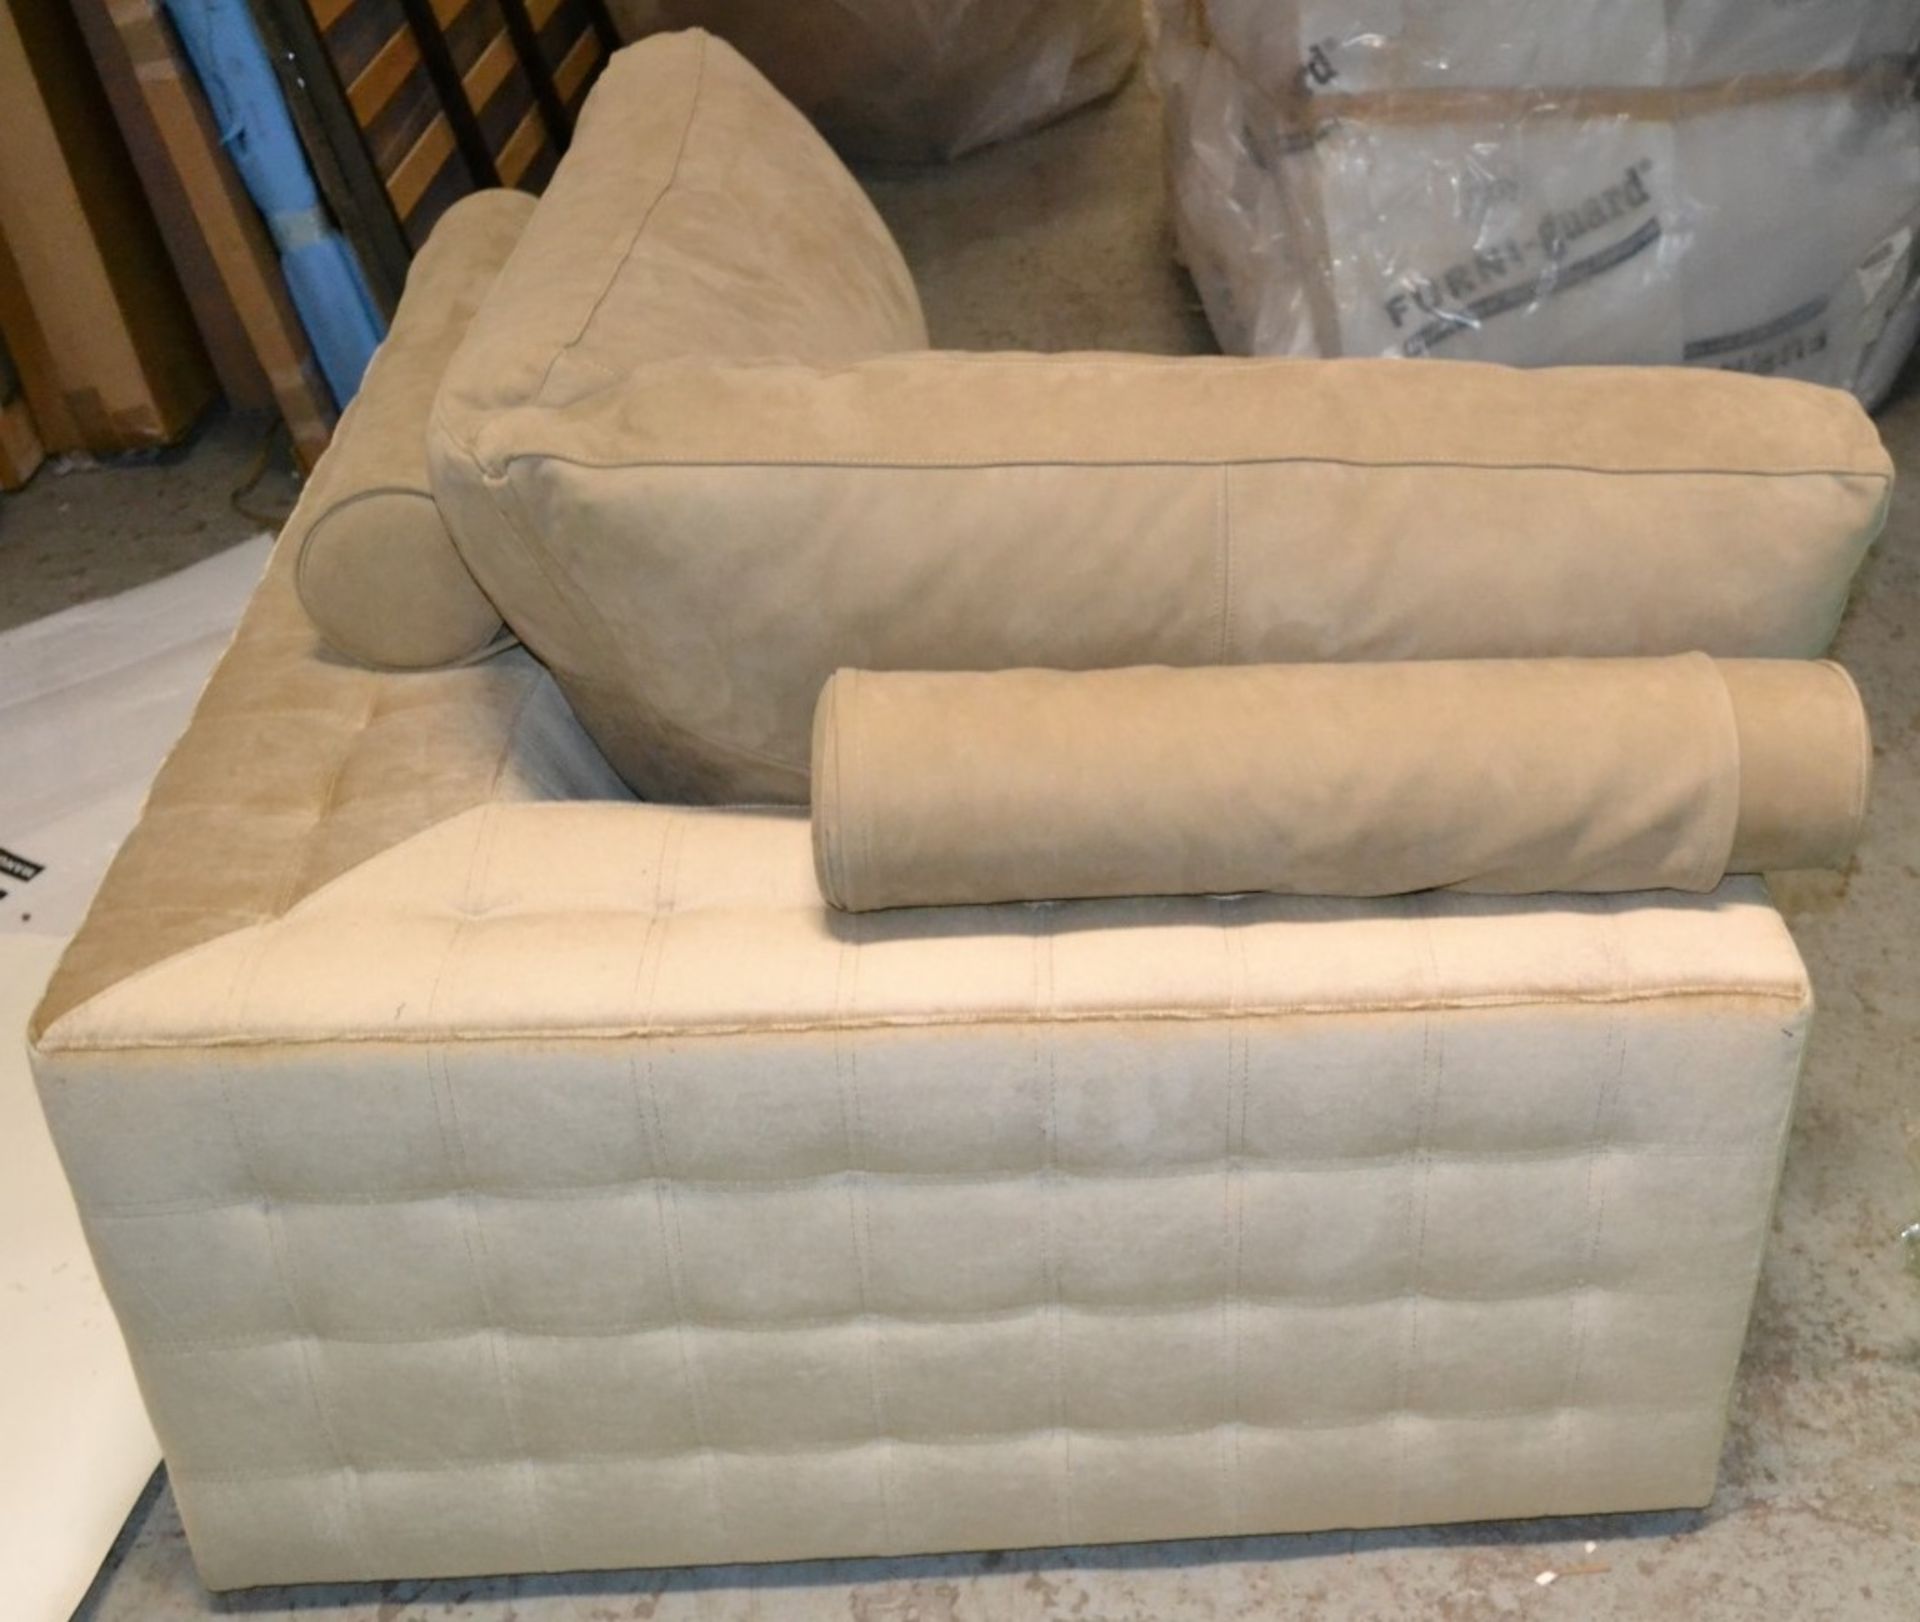 1 x GIORGIO Lifetime "Sayonara" Sectional Sofa Module (Sx132) - Upholstered In Camel-coloured Nubuck - Image 3 of 10